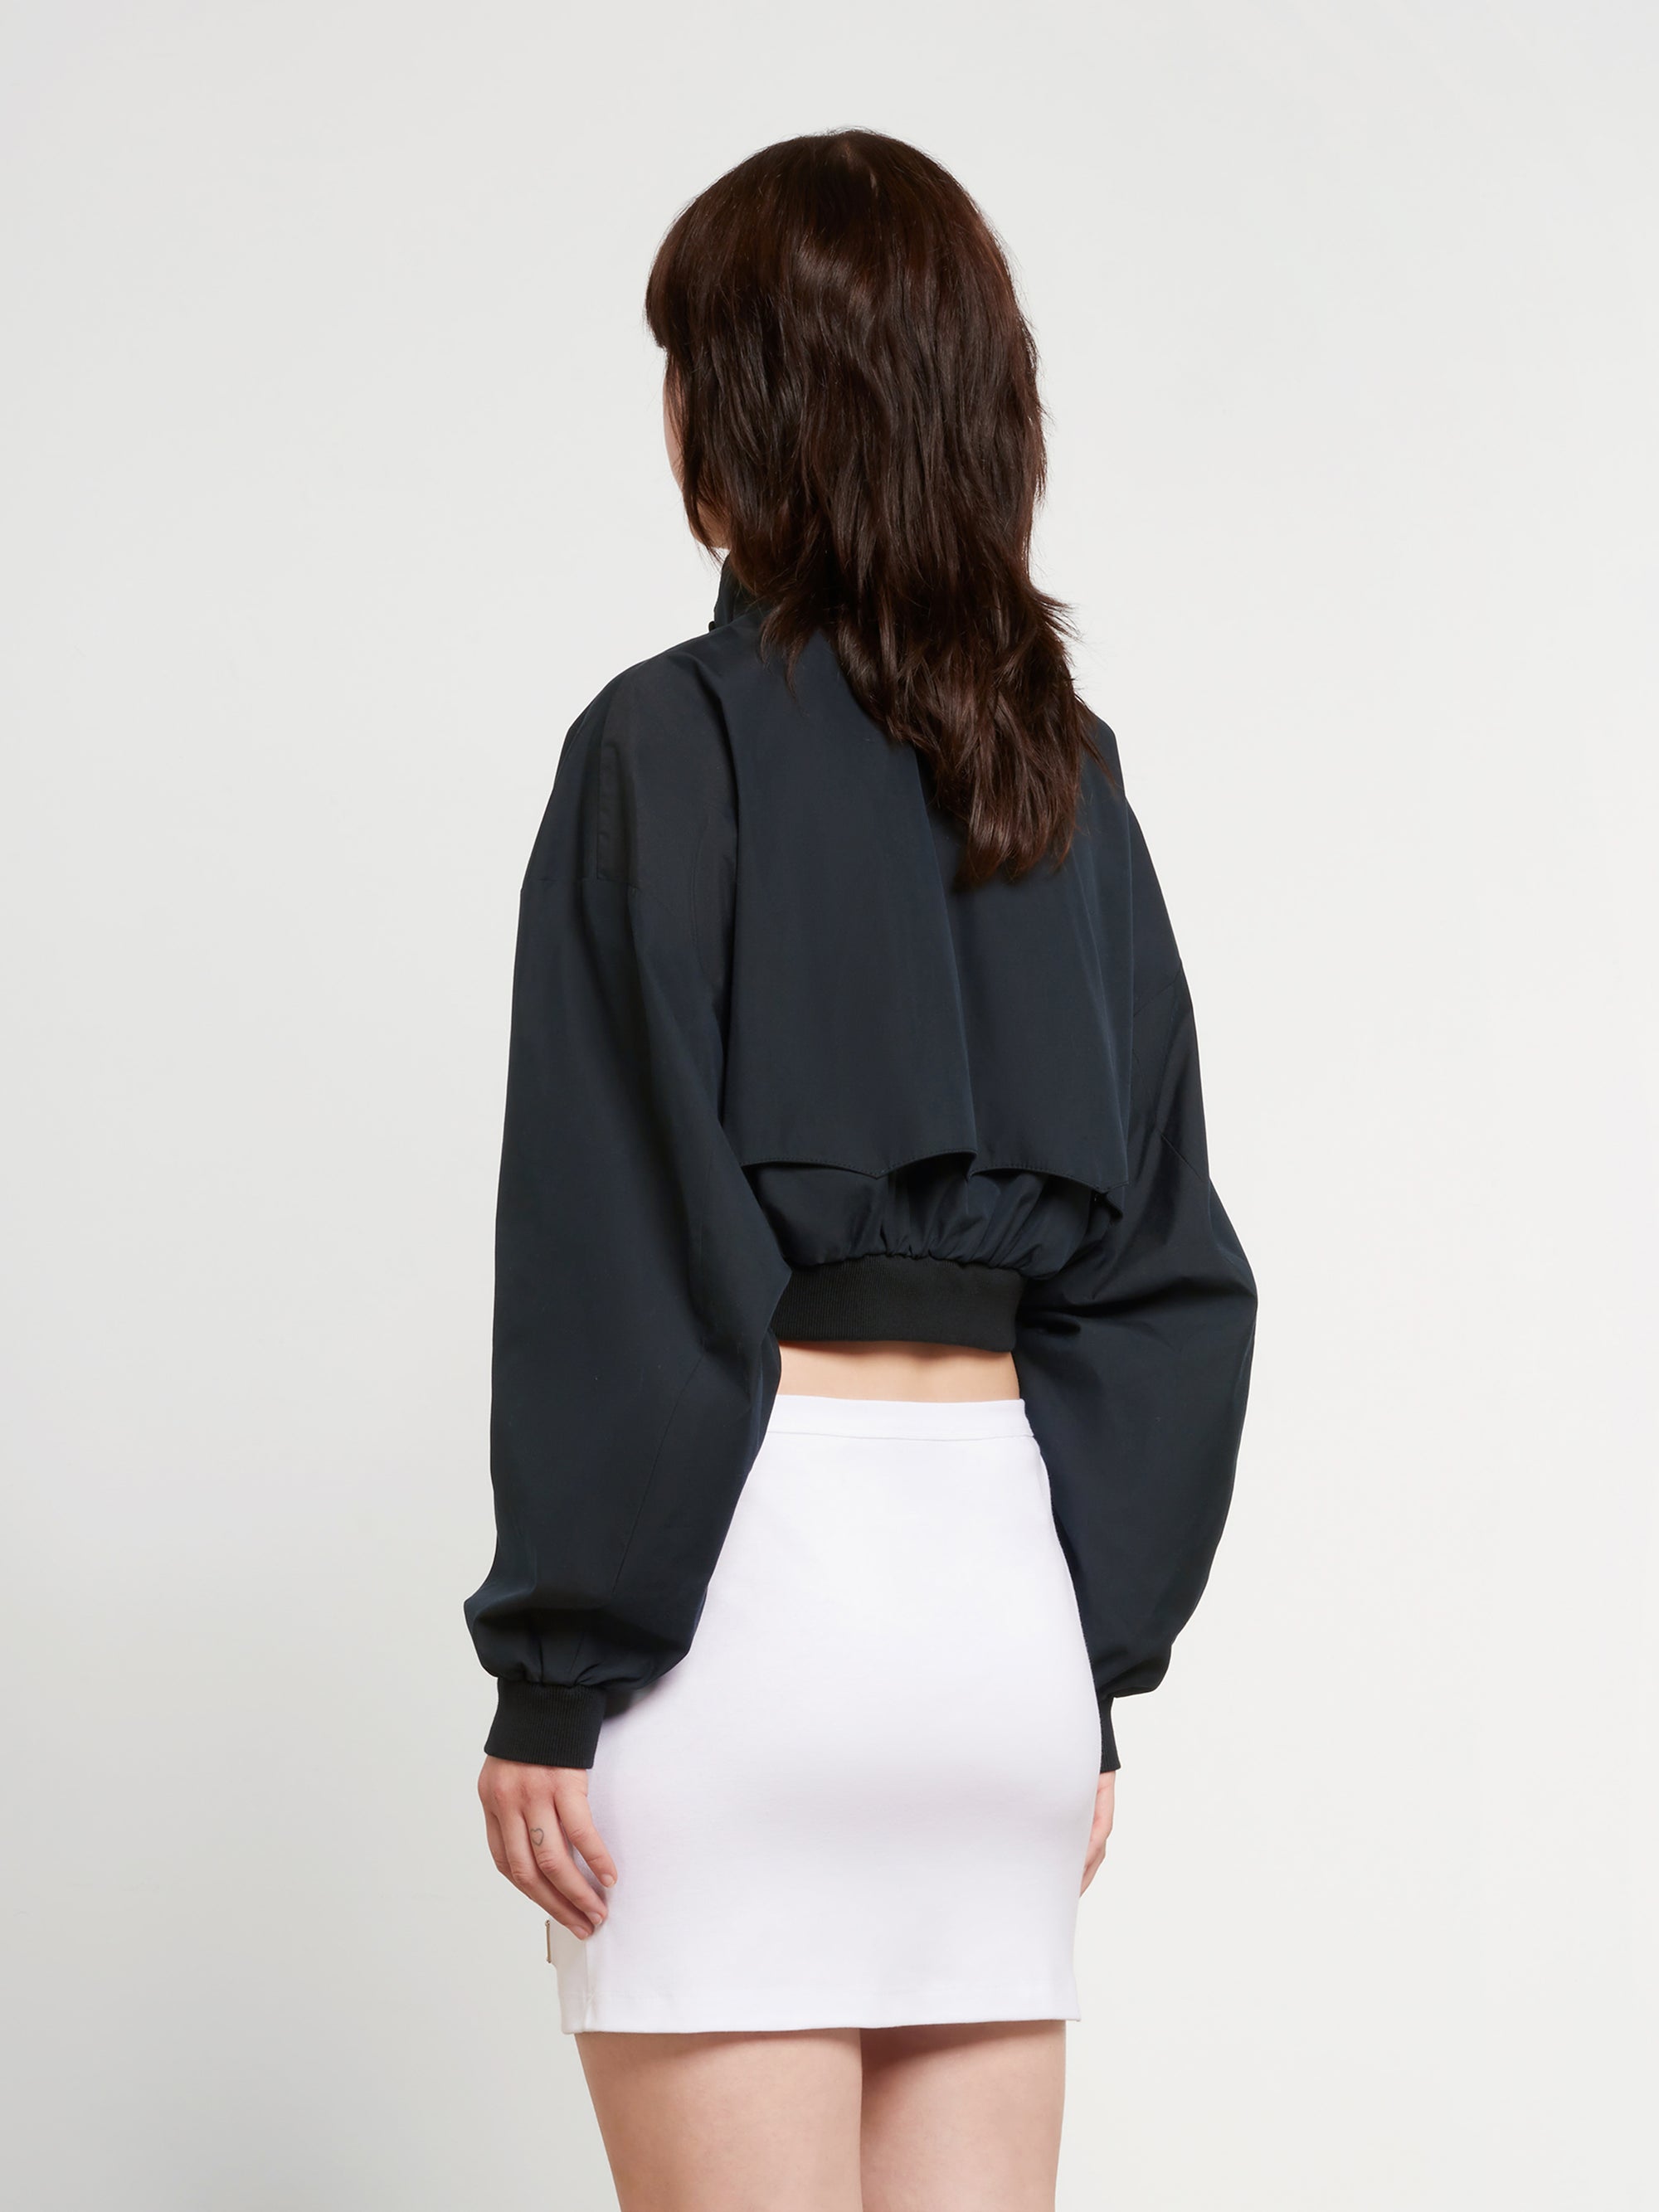 Prada - Women’s Cotton Cropped Jacket - (Black) view 3